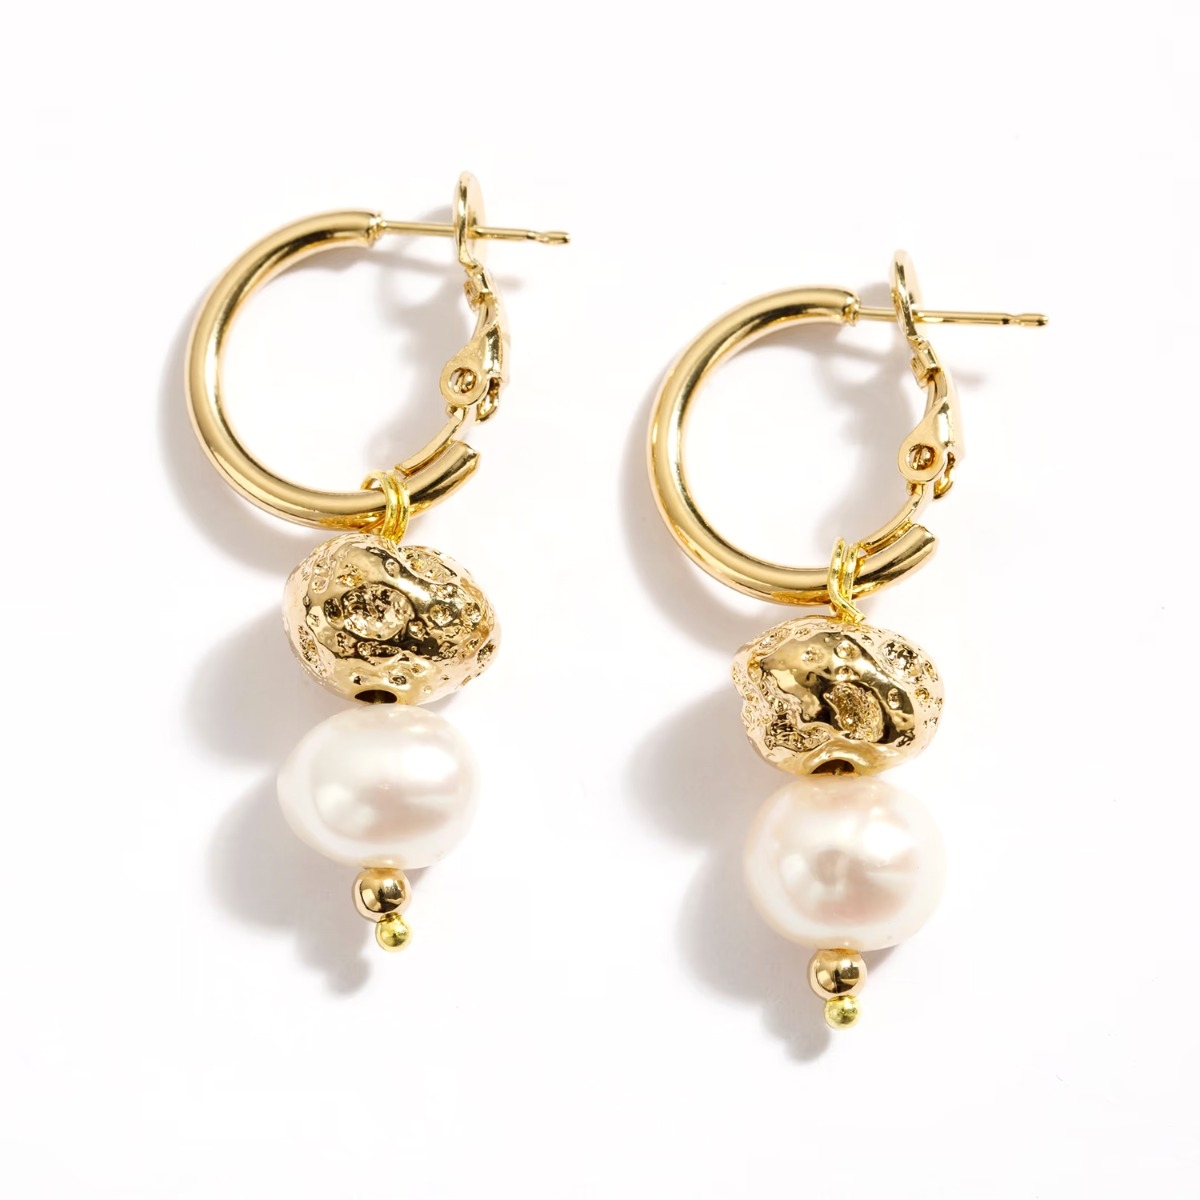 Danon Jewelry "Hestia" Earrings - 1